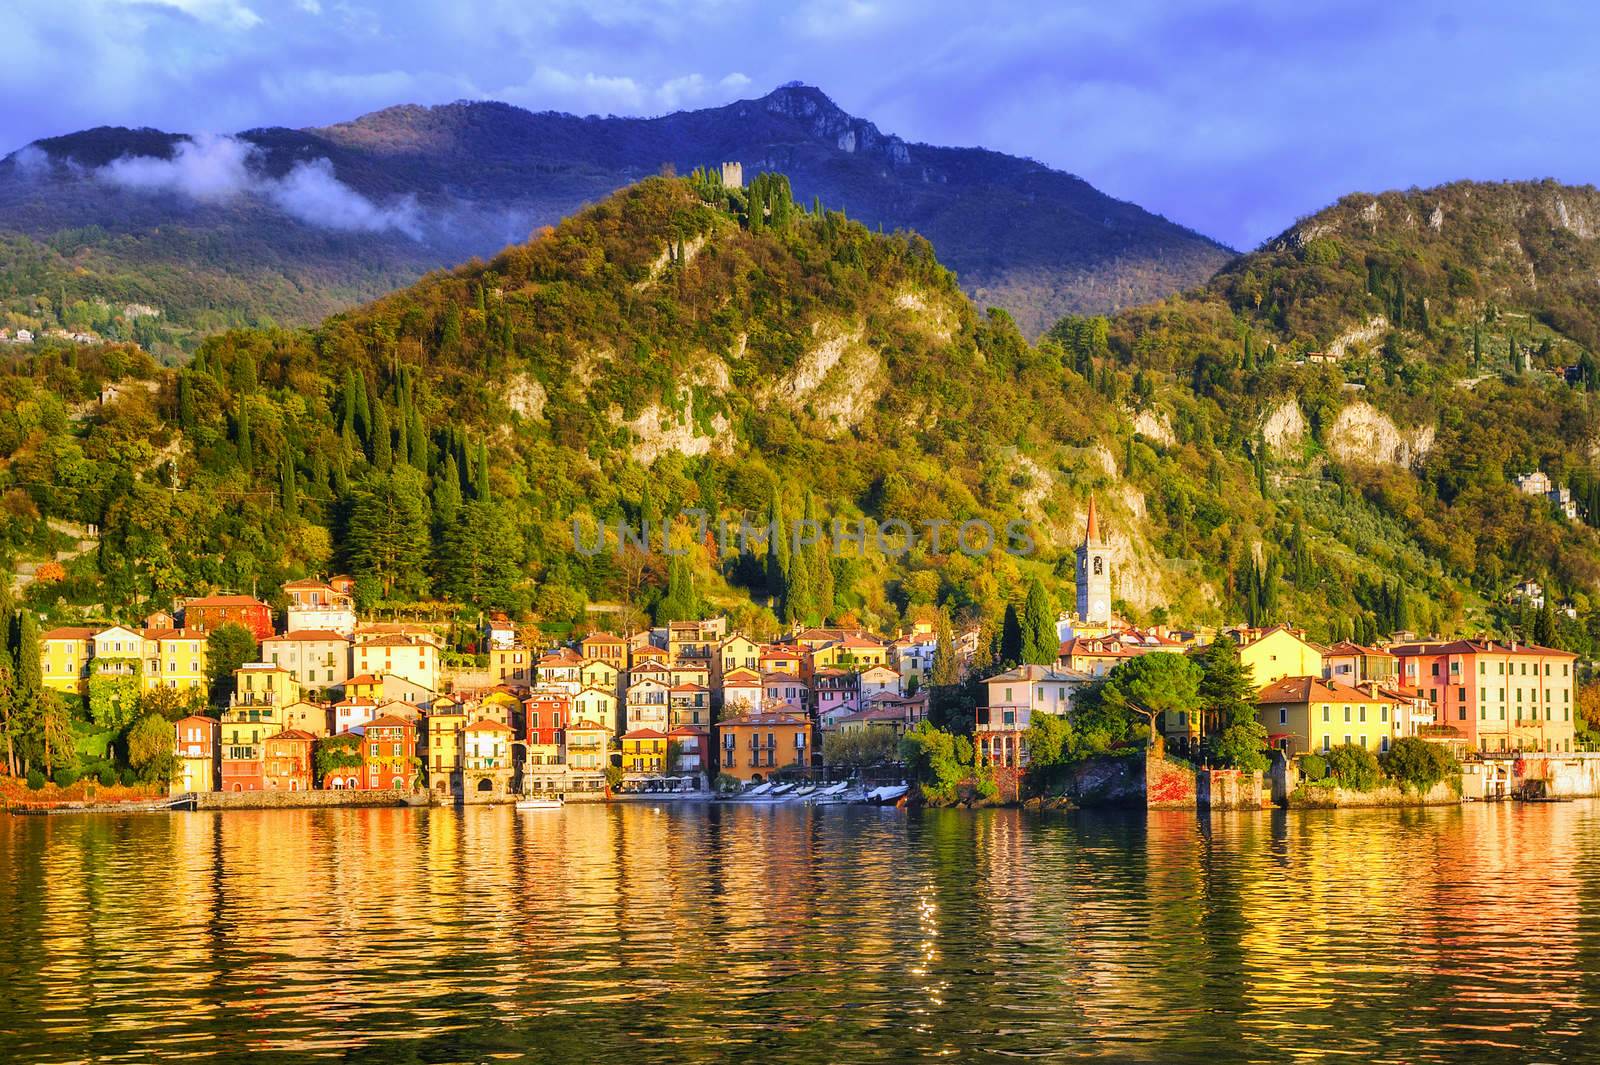 Menaggio, Como Lake, Italy by GlobePhotos